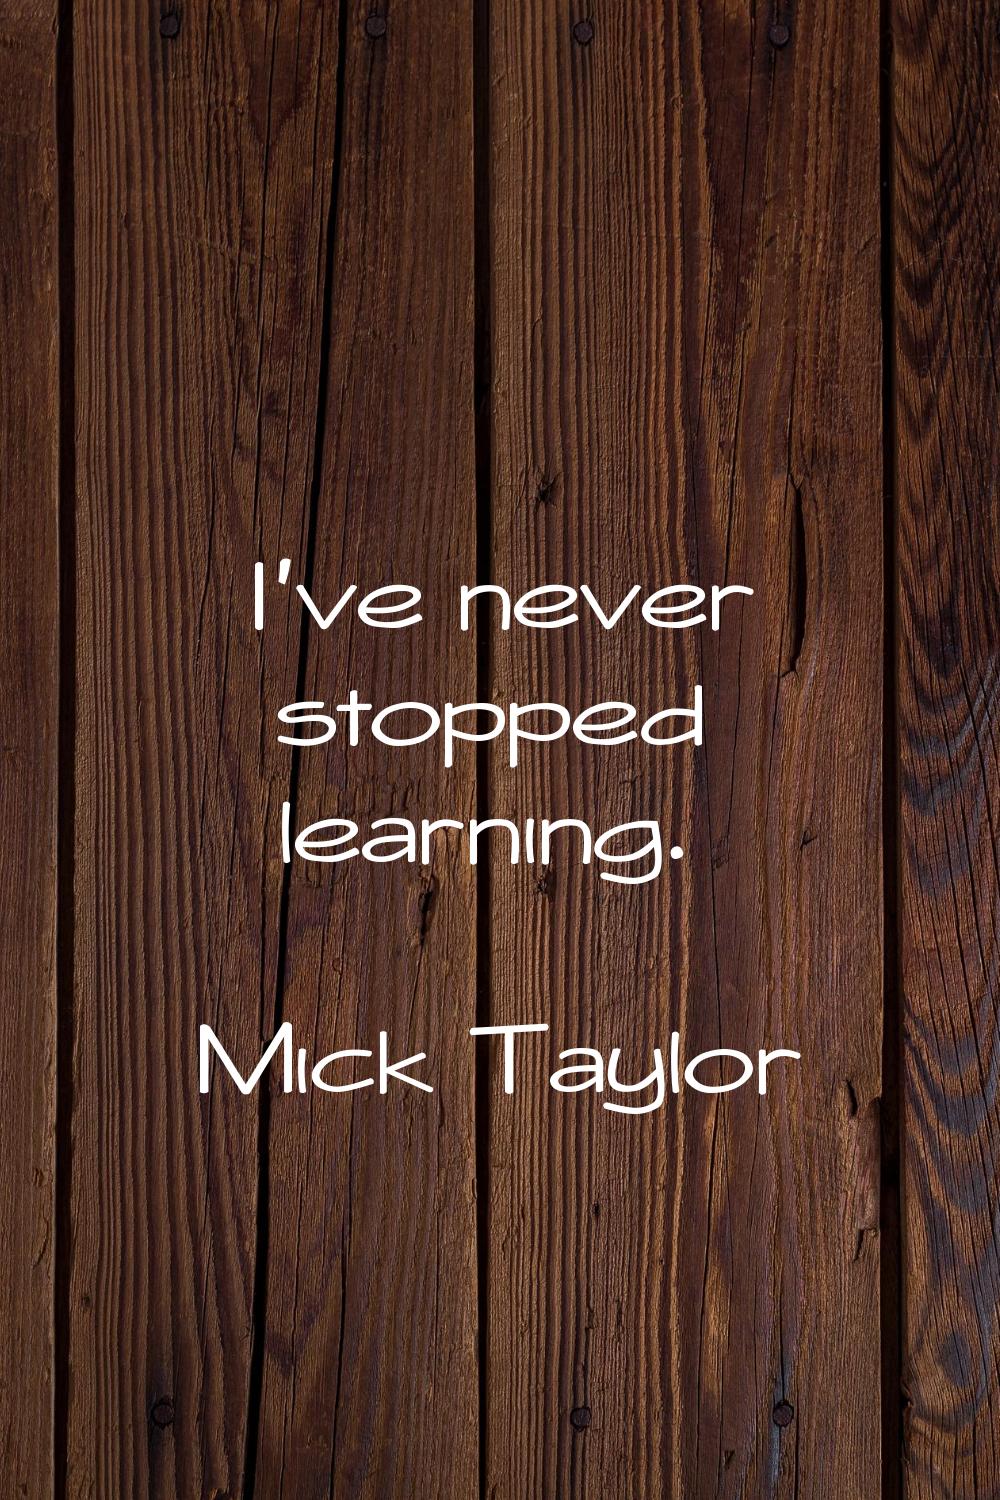 I've never stopped learning.